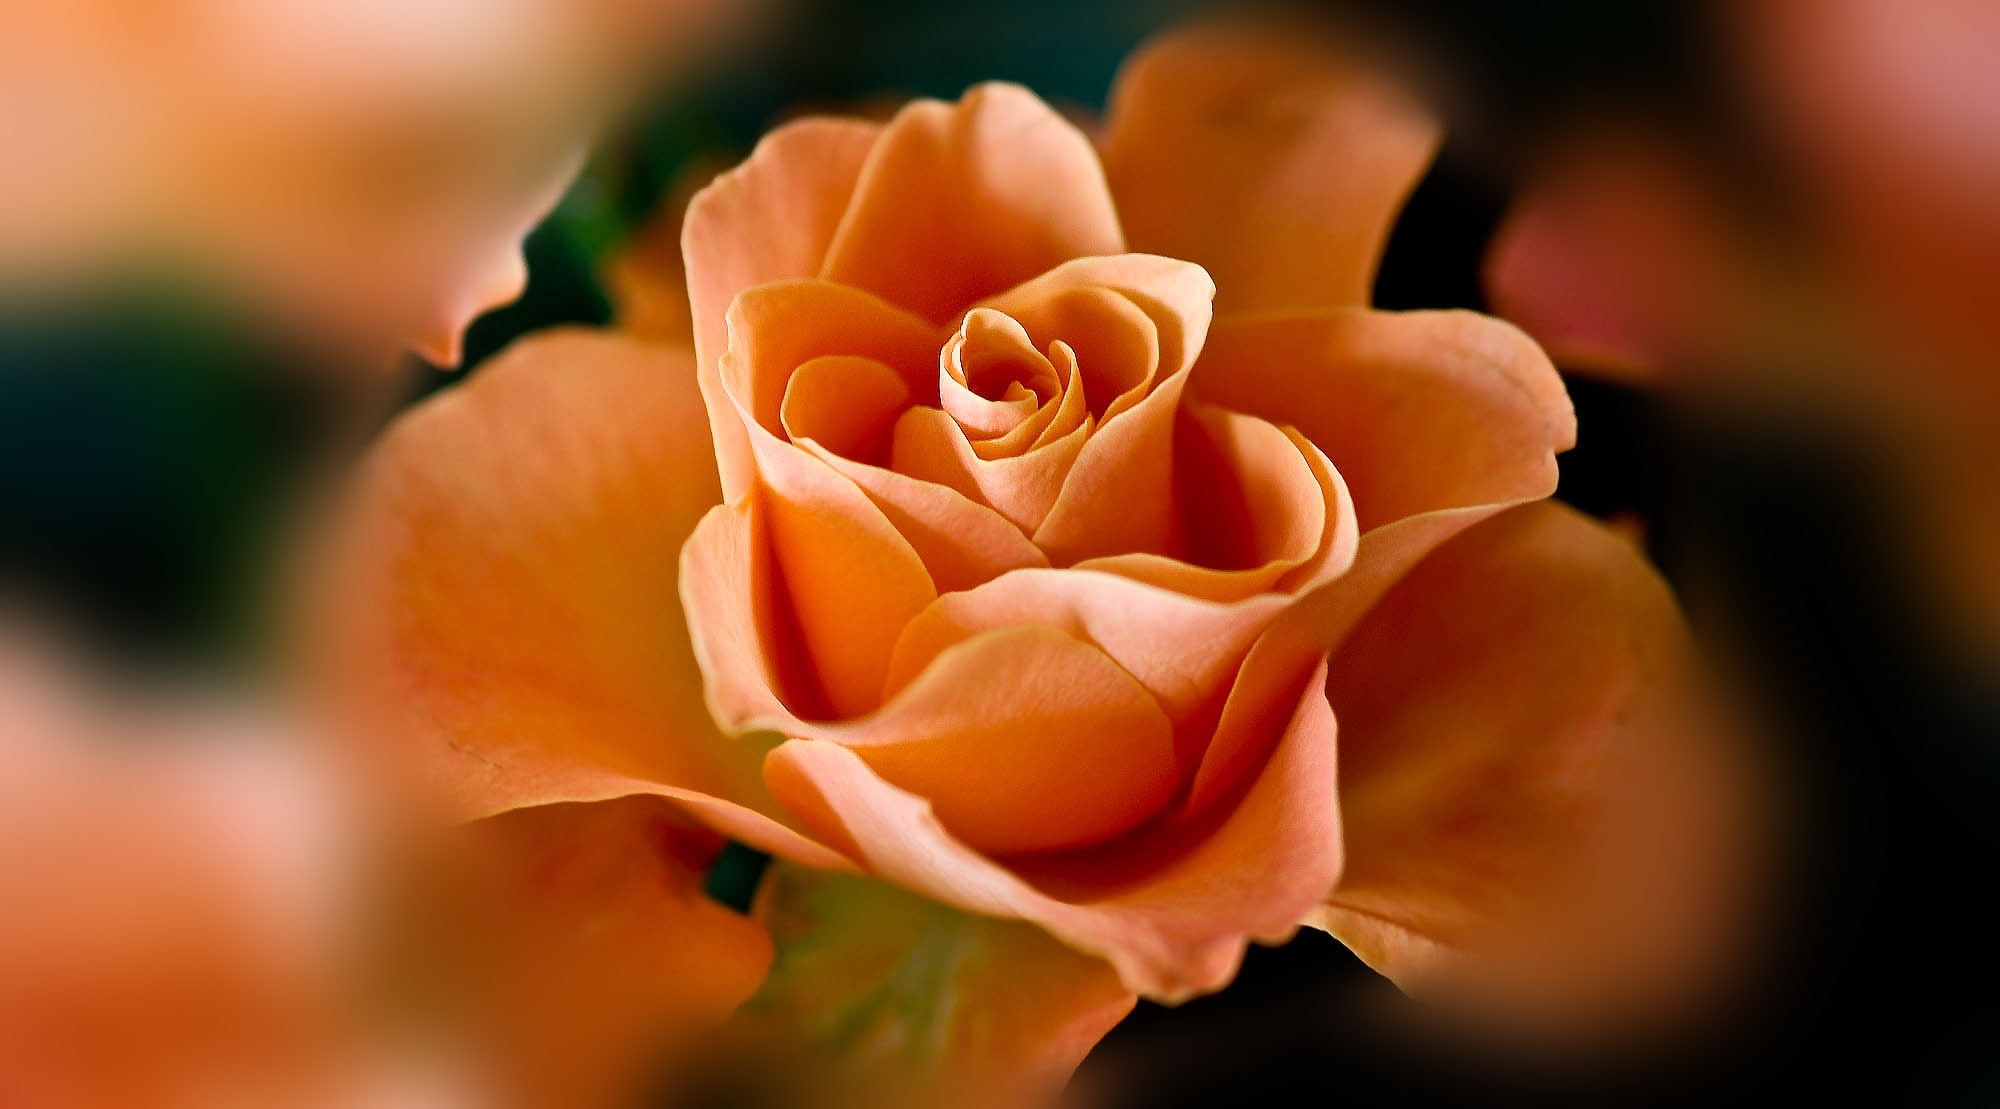 tilt shift lens photography of orange rose